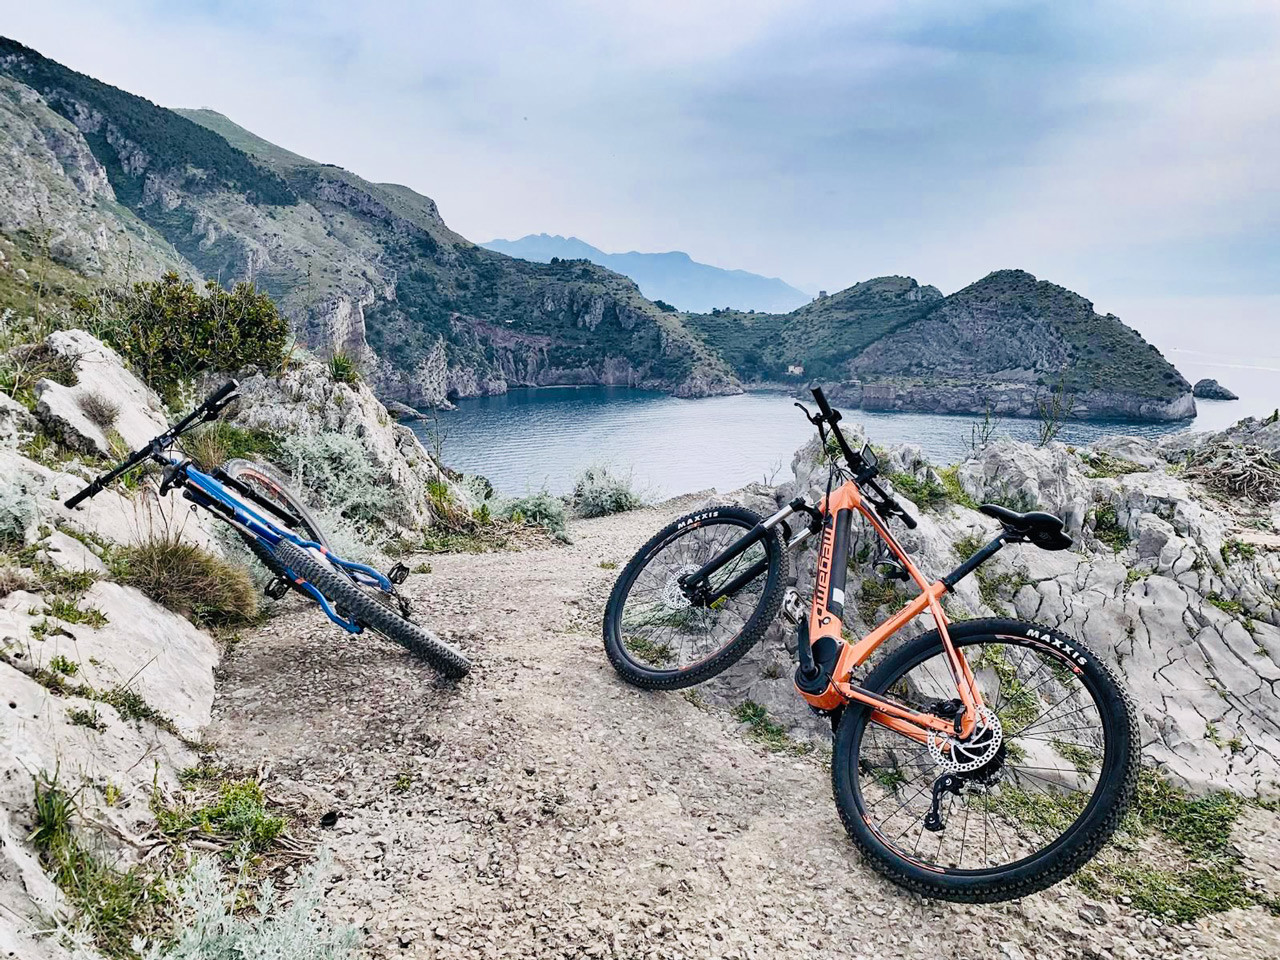 Toonado - Amalfi coast guided bike tour from Sorrento